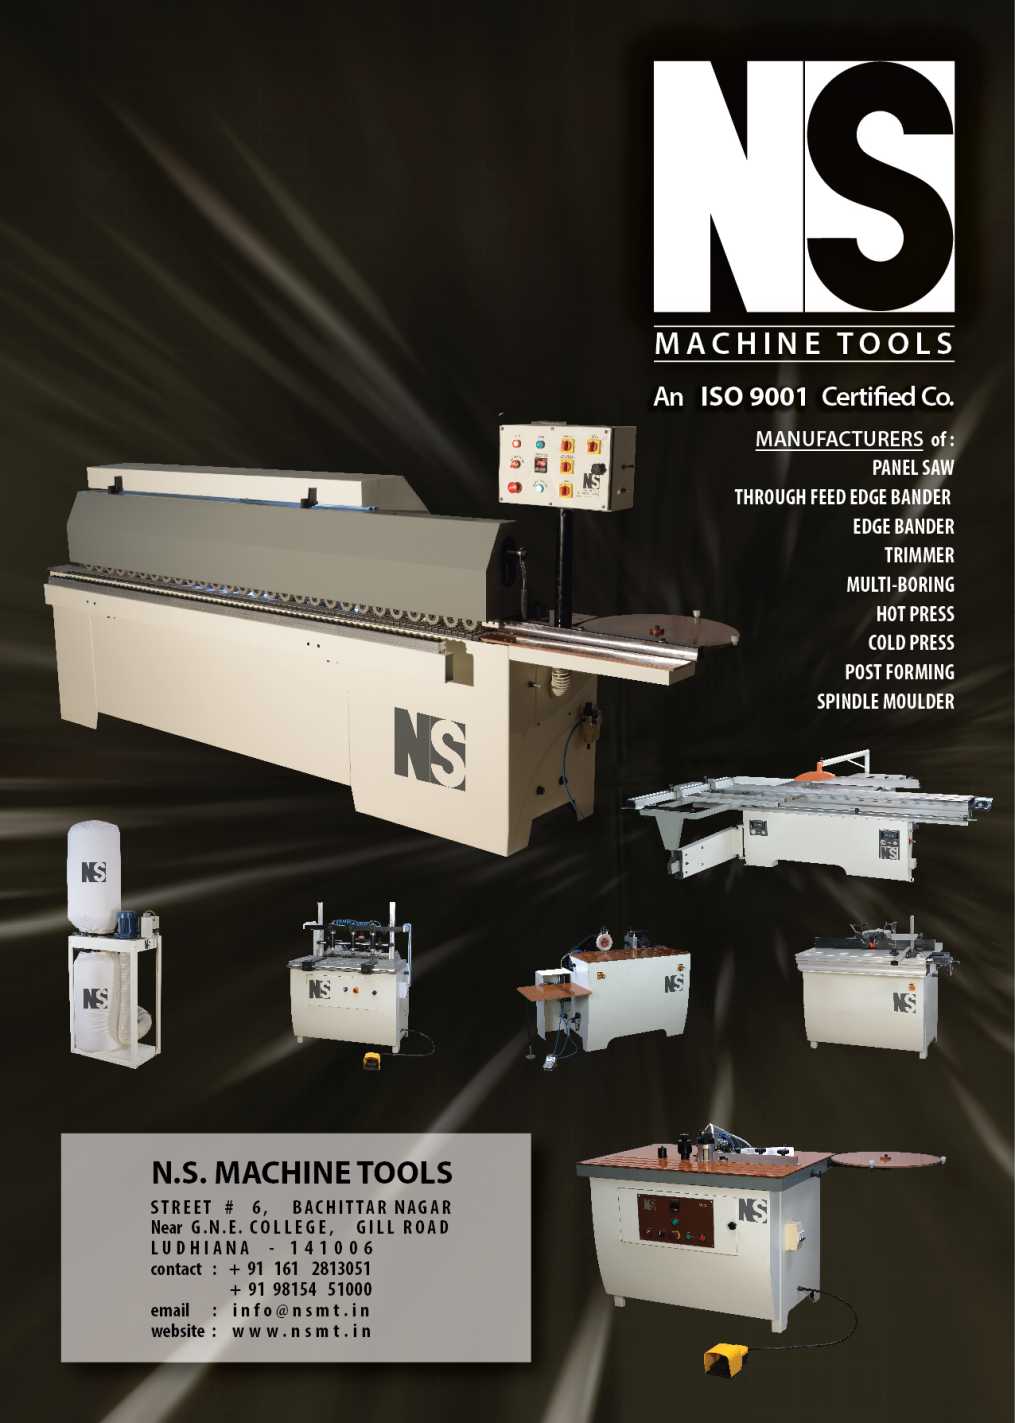 N.S. Machine Tools